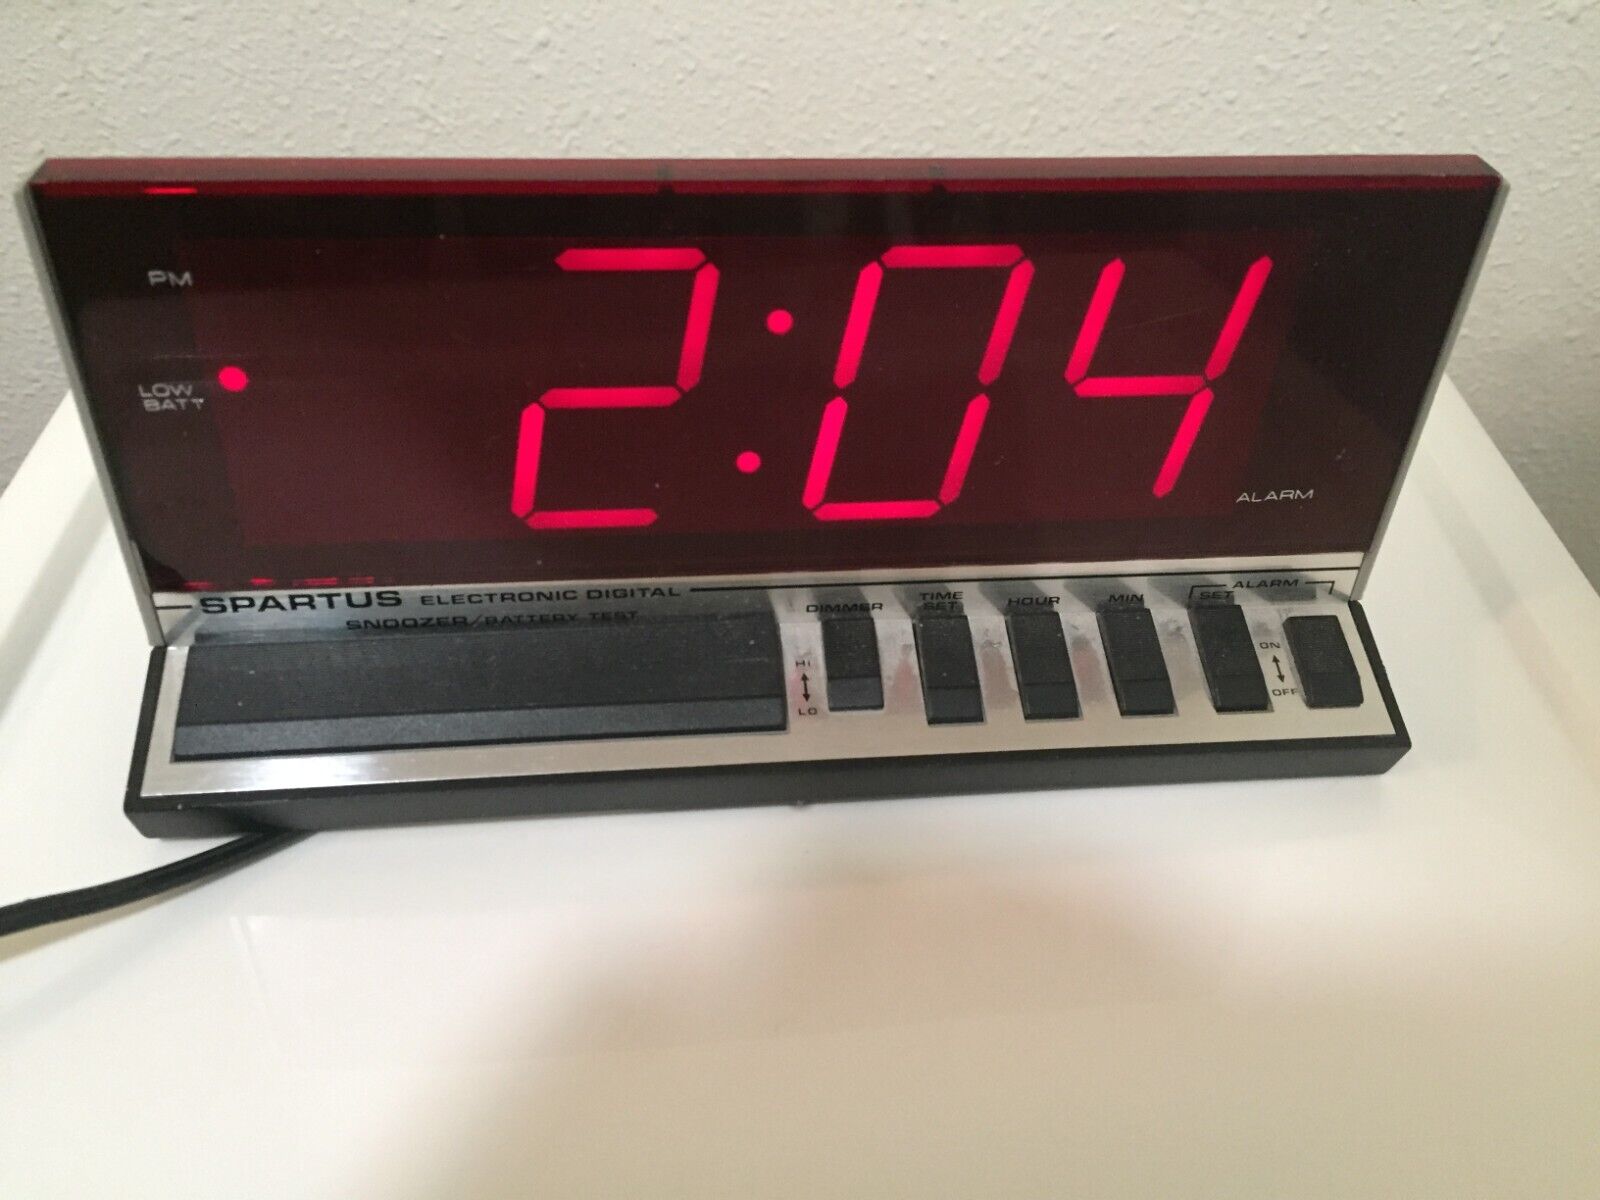 Vintage Spartus Electronic Digital Alarm Clock No. 1150 Large Display Hong Kong